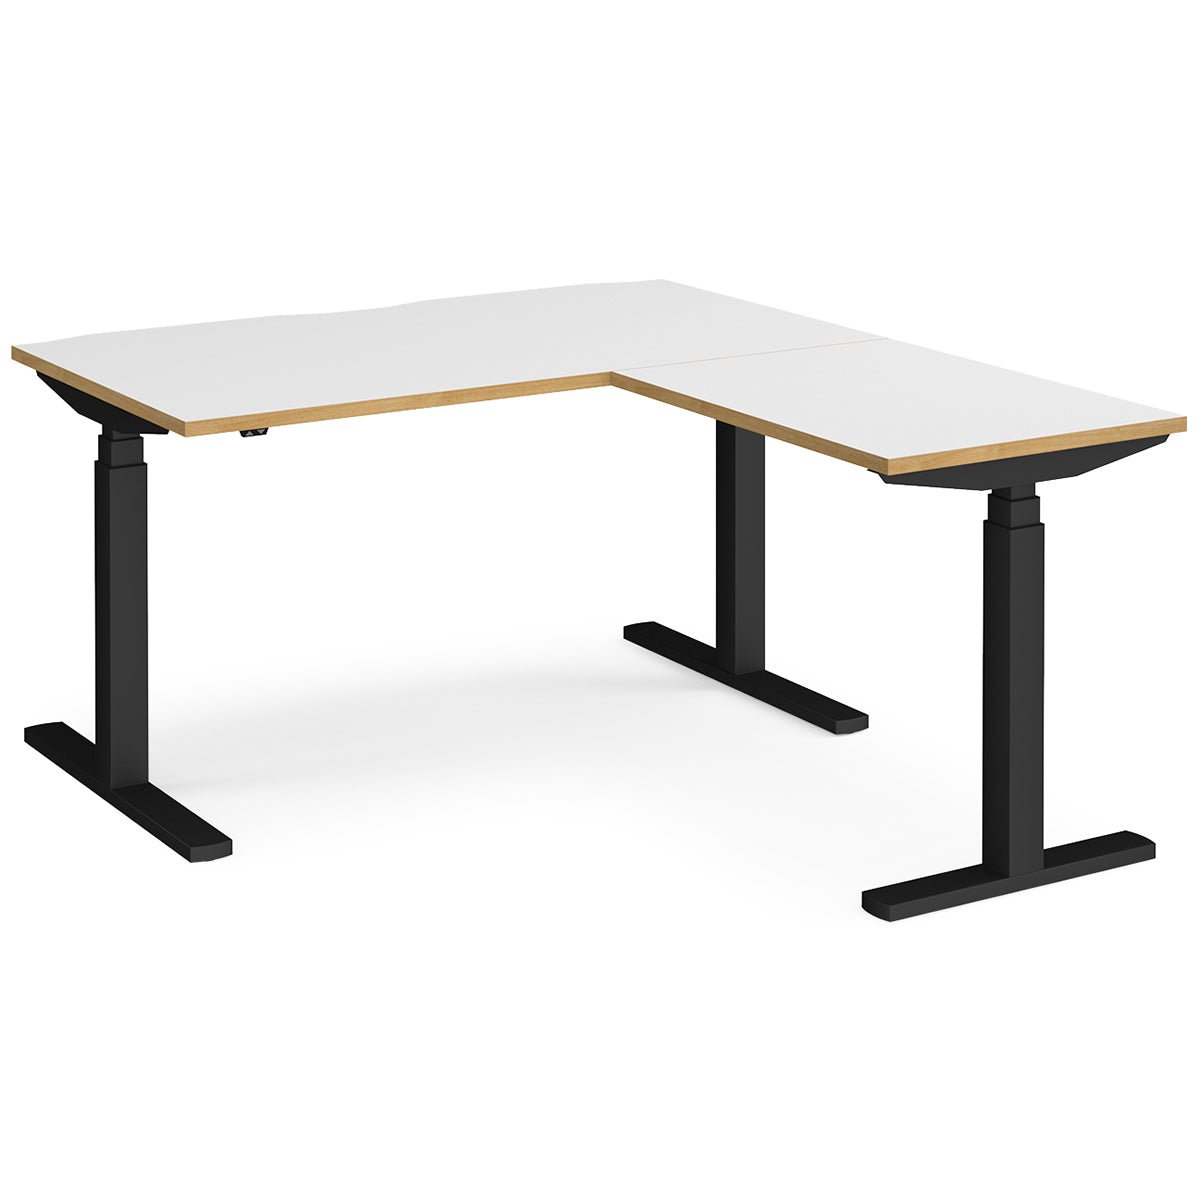 Sit Stand Electric L Shaped Desk - Fenstone®